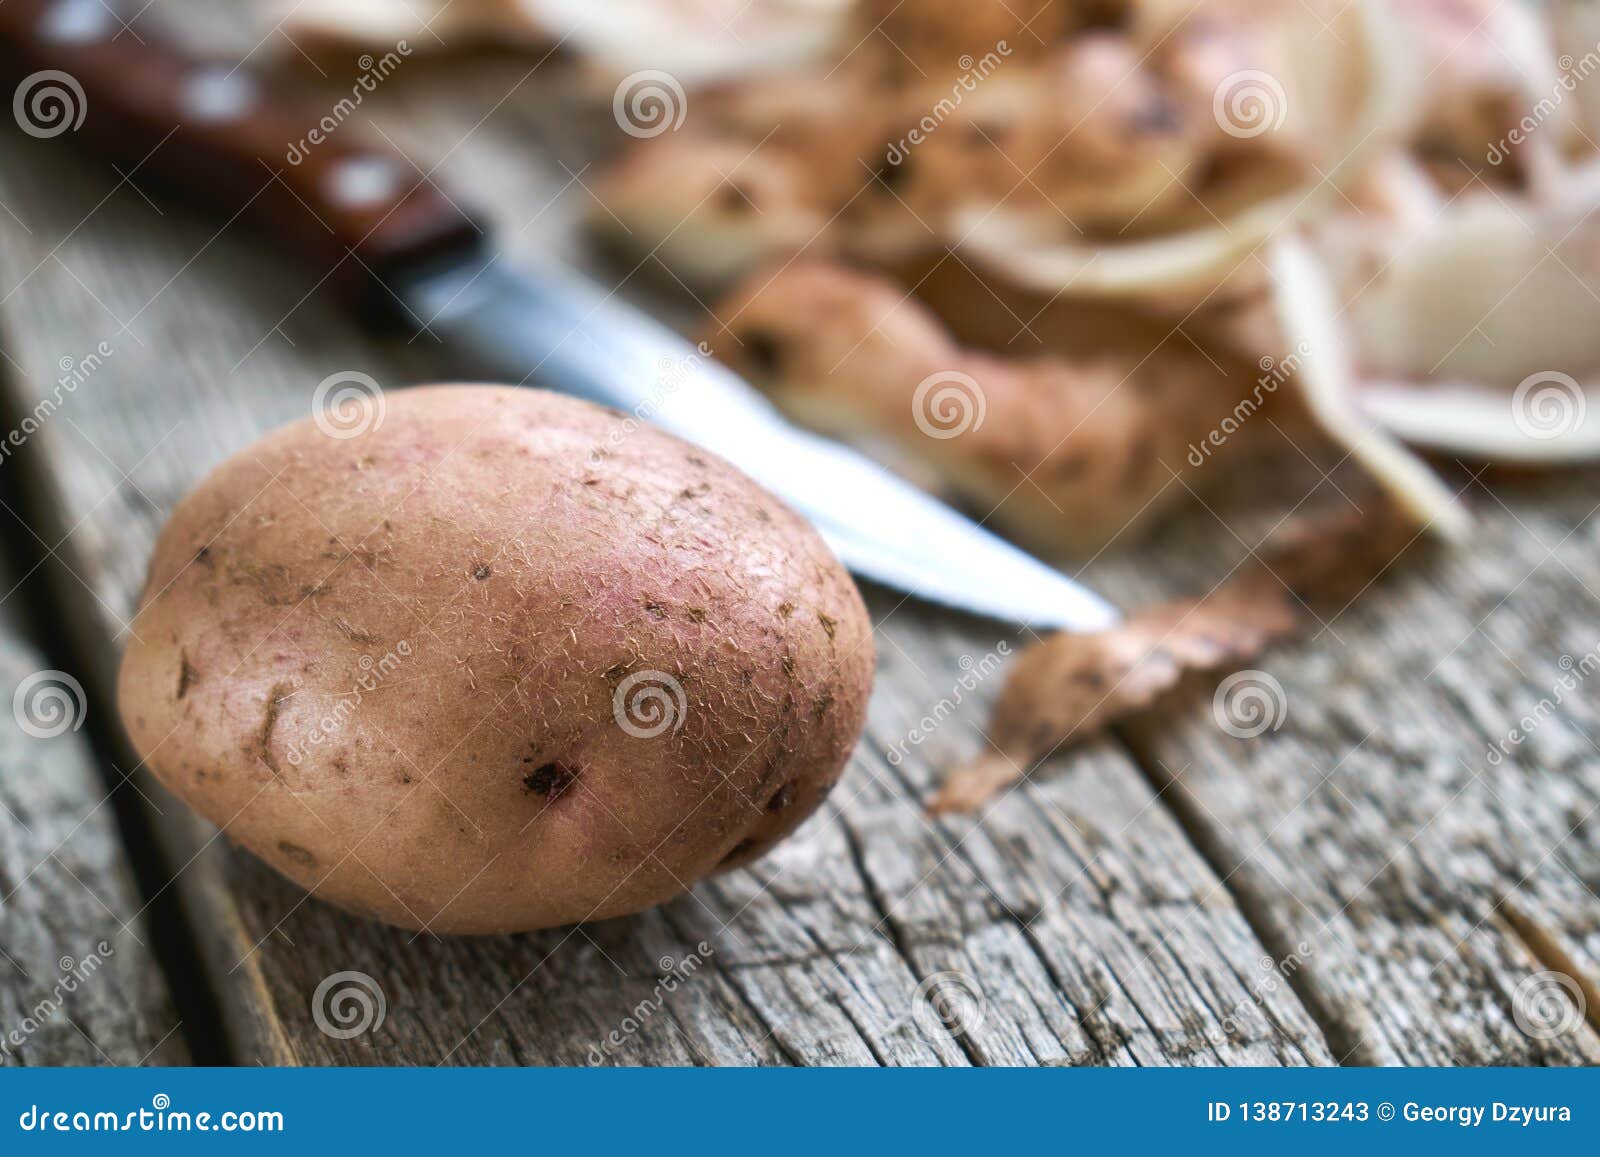 Steam peeling potatoes фото 101